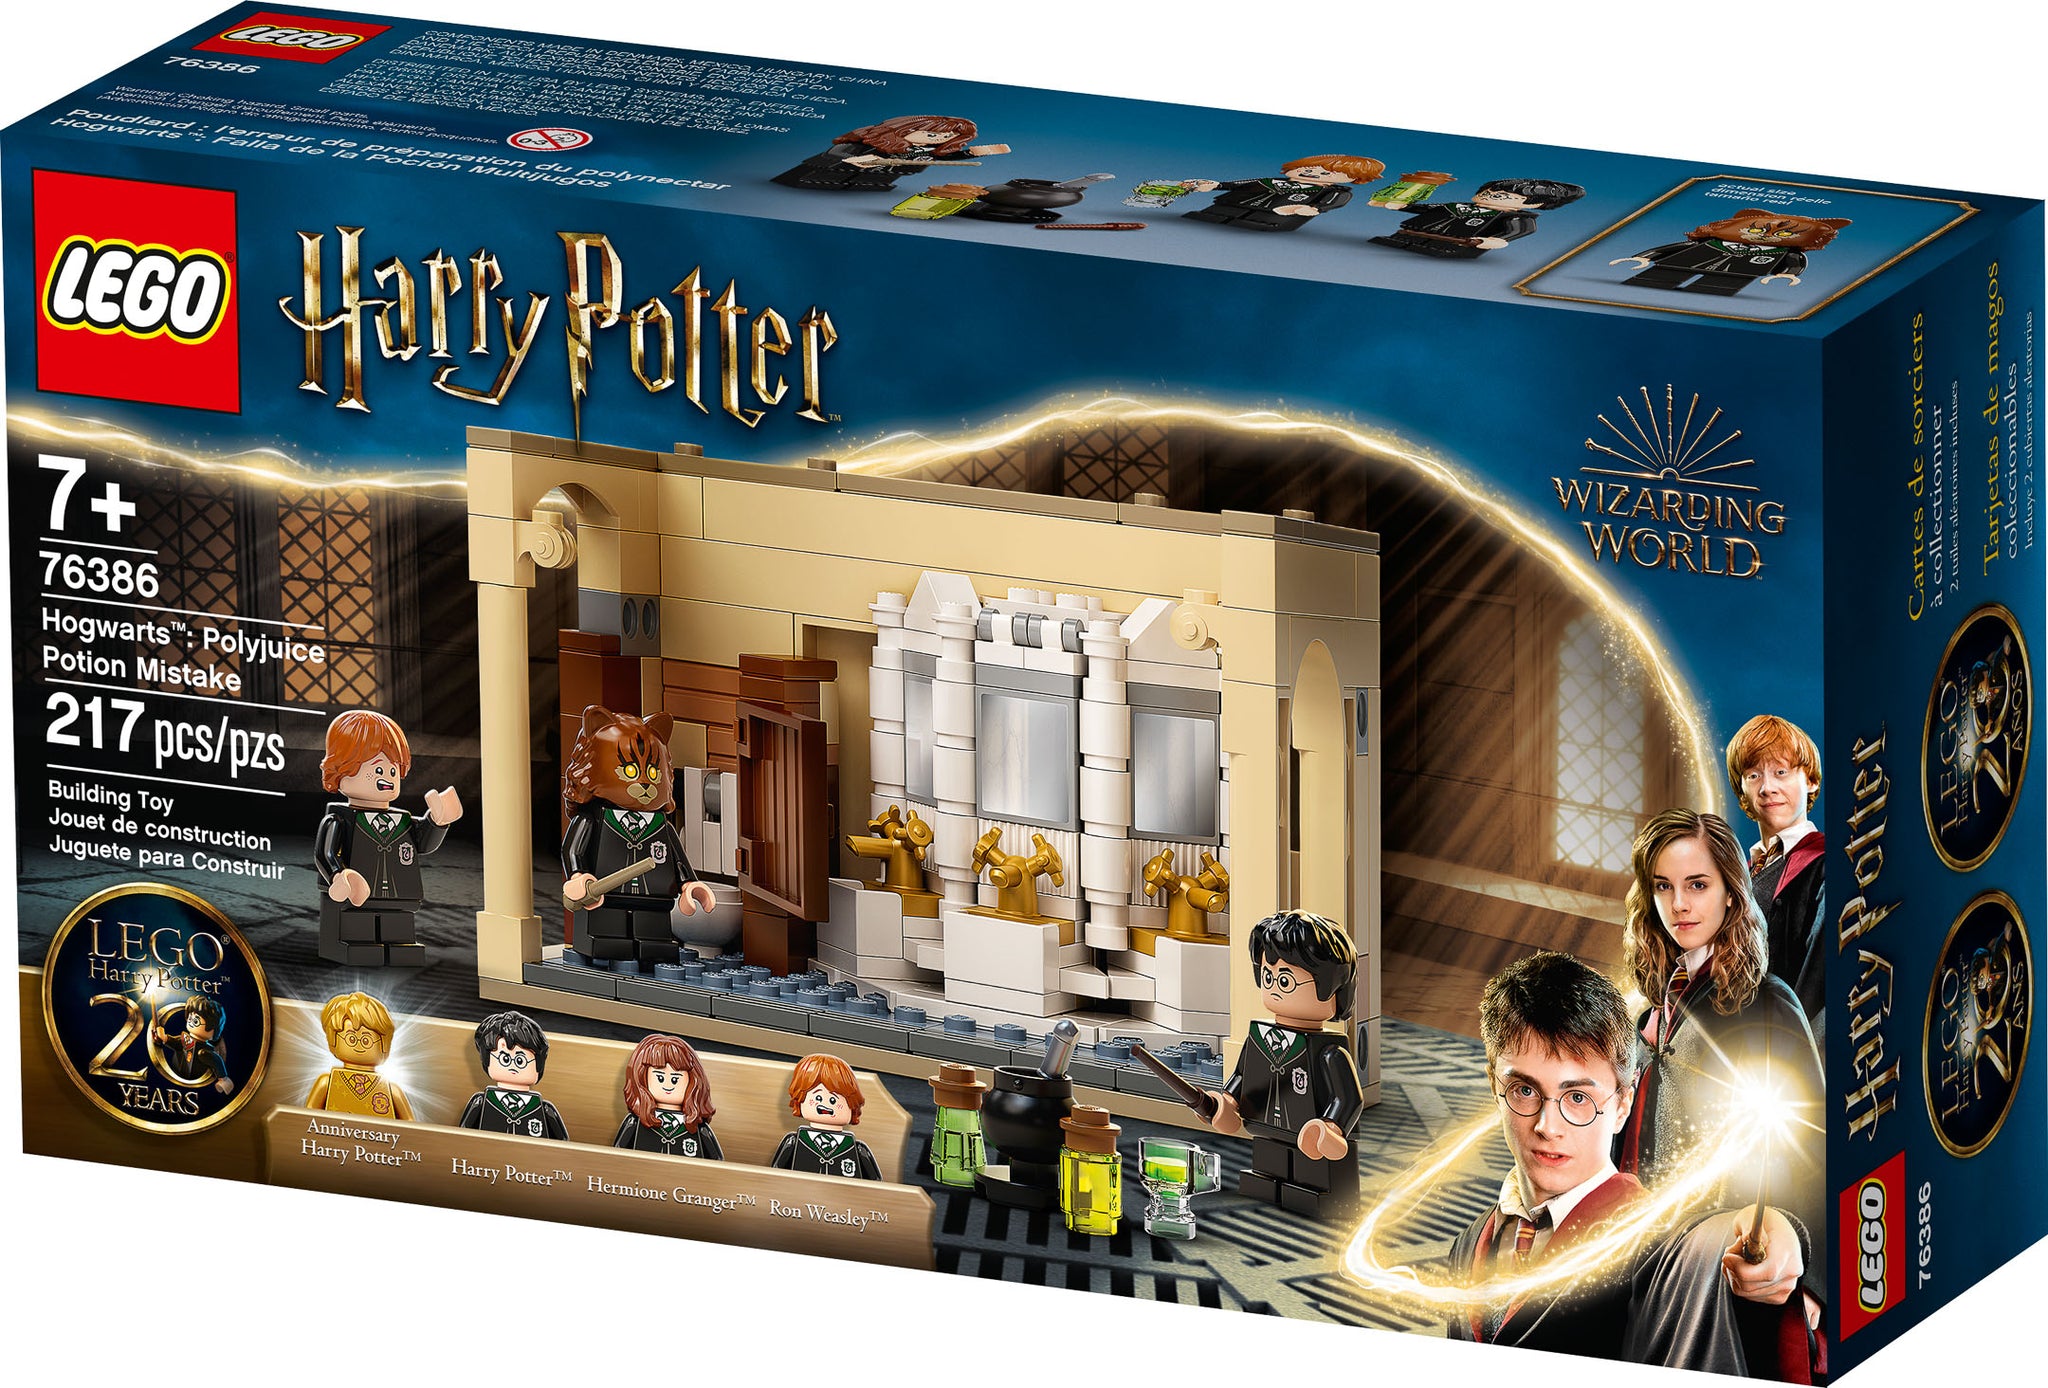 LEGO 76386 Harry Potter Hogwarts ™ Polyjuice Potion Mistake - Brand New!  Sealed! 673419339735